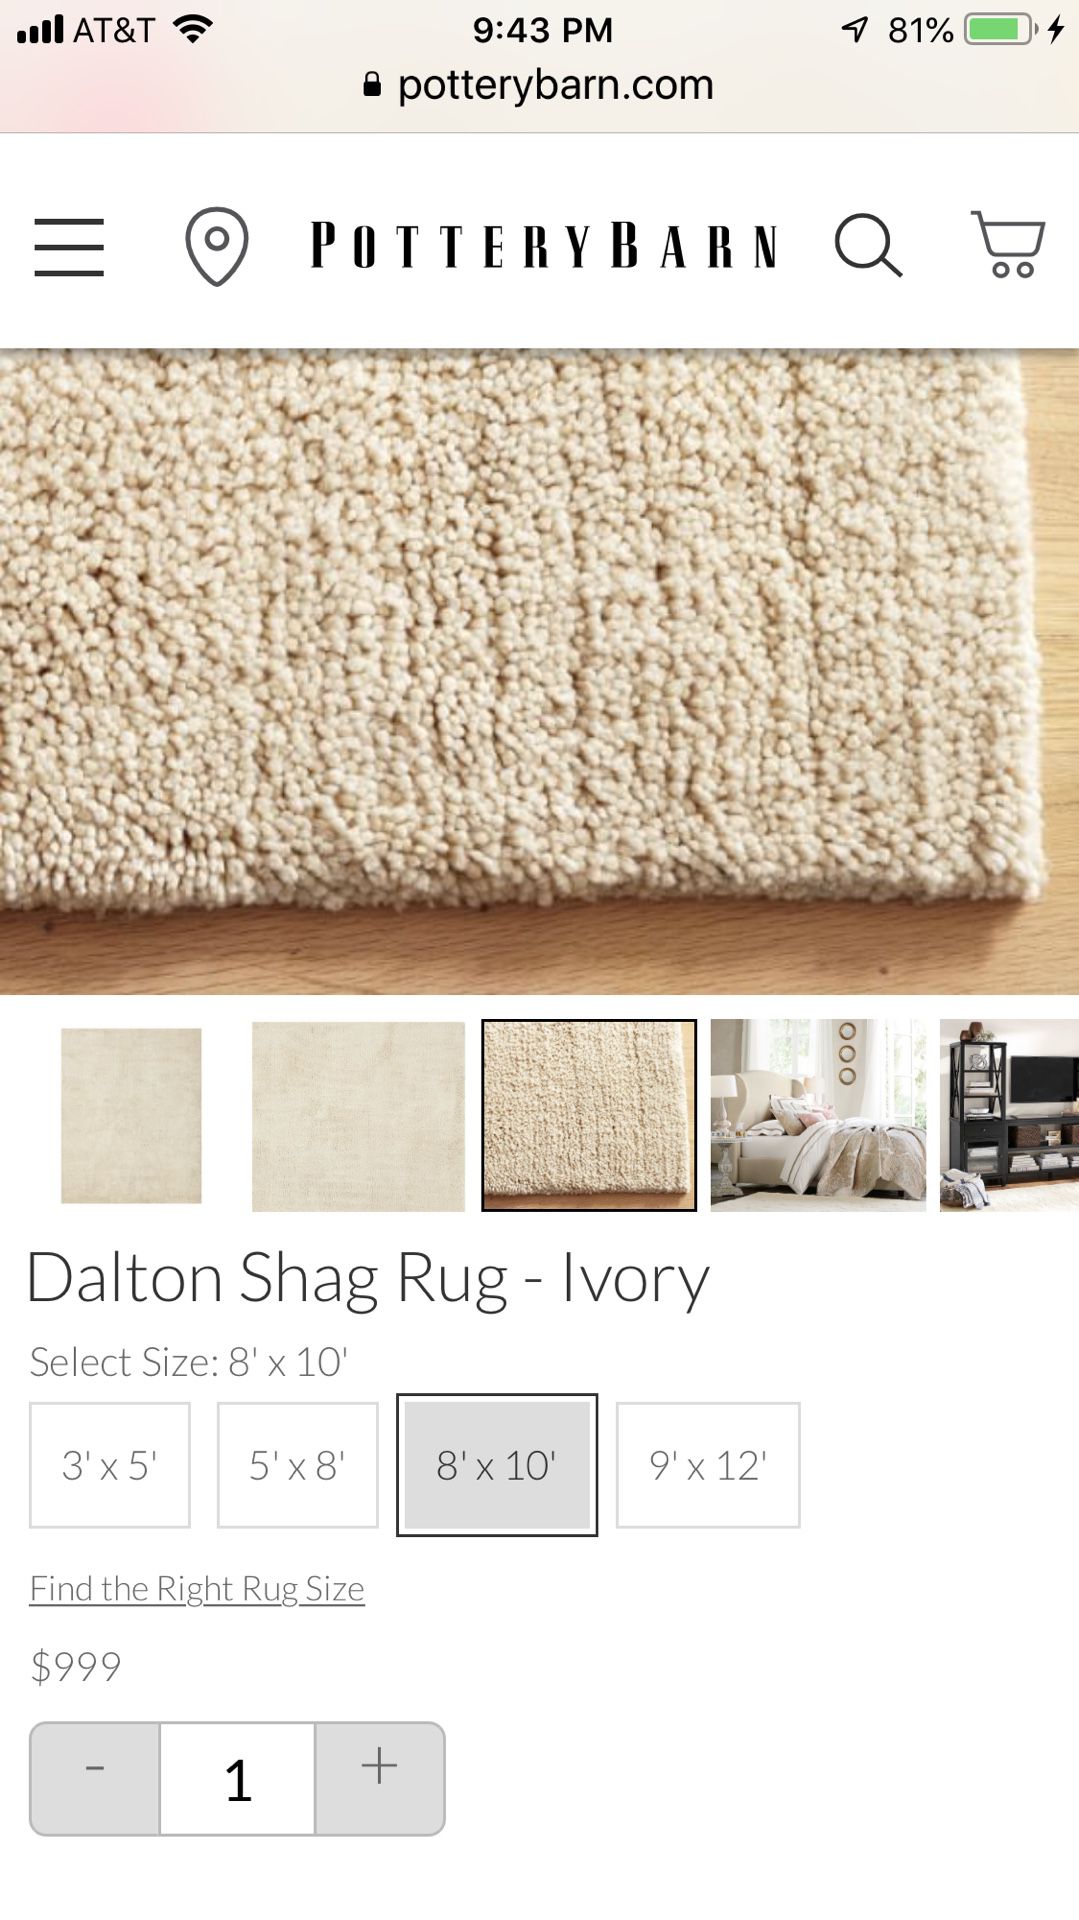 Pottery Barn dalton shag rug Ivory - 8”x10”